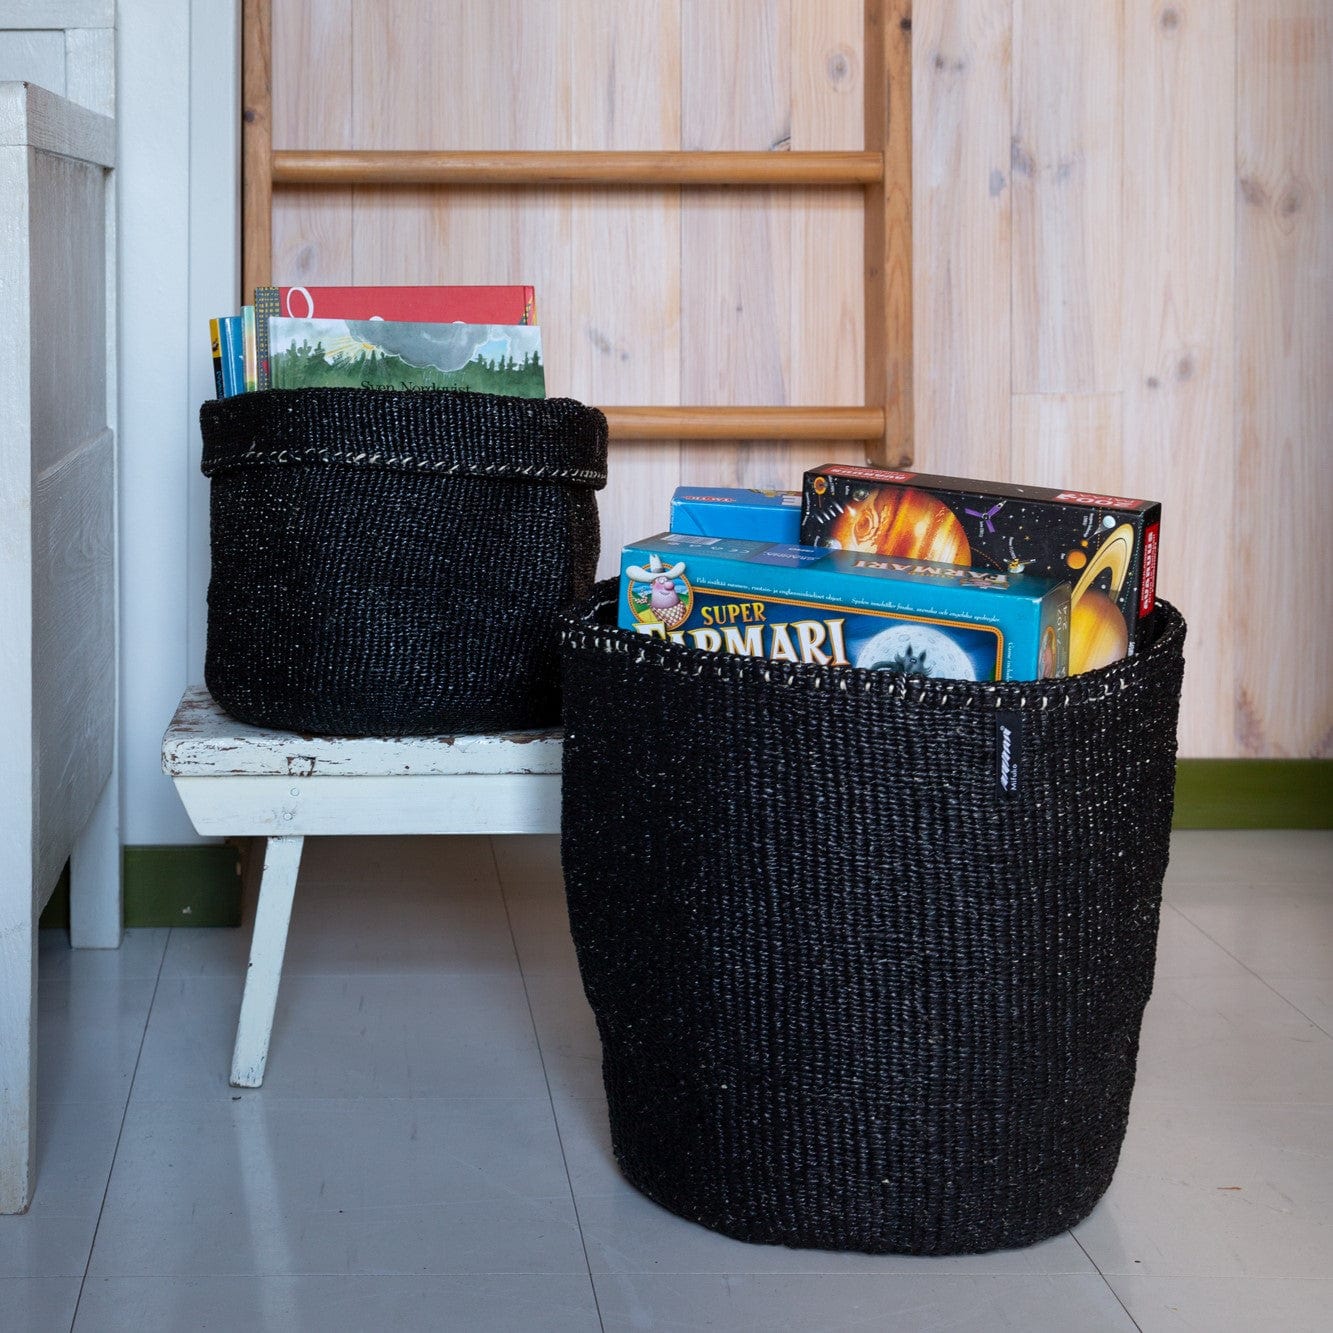 Mifuko Partly recycled plastic and sisal Medium size basket L Kiondo basket | Black L